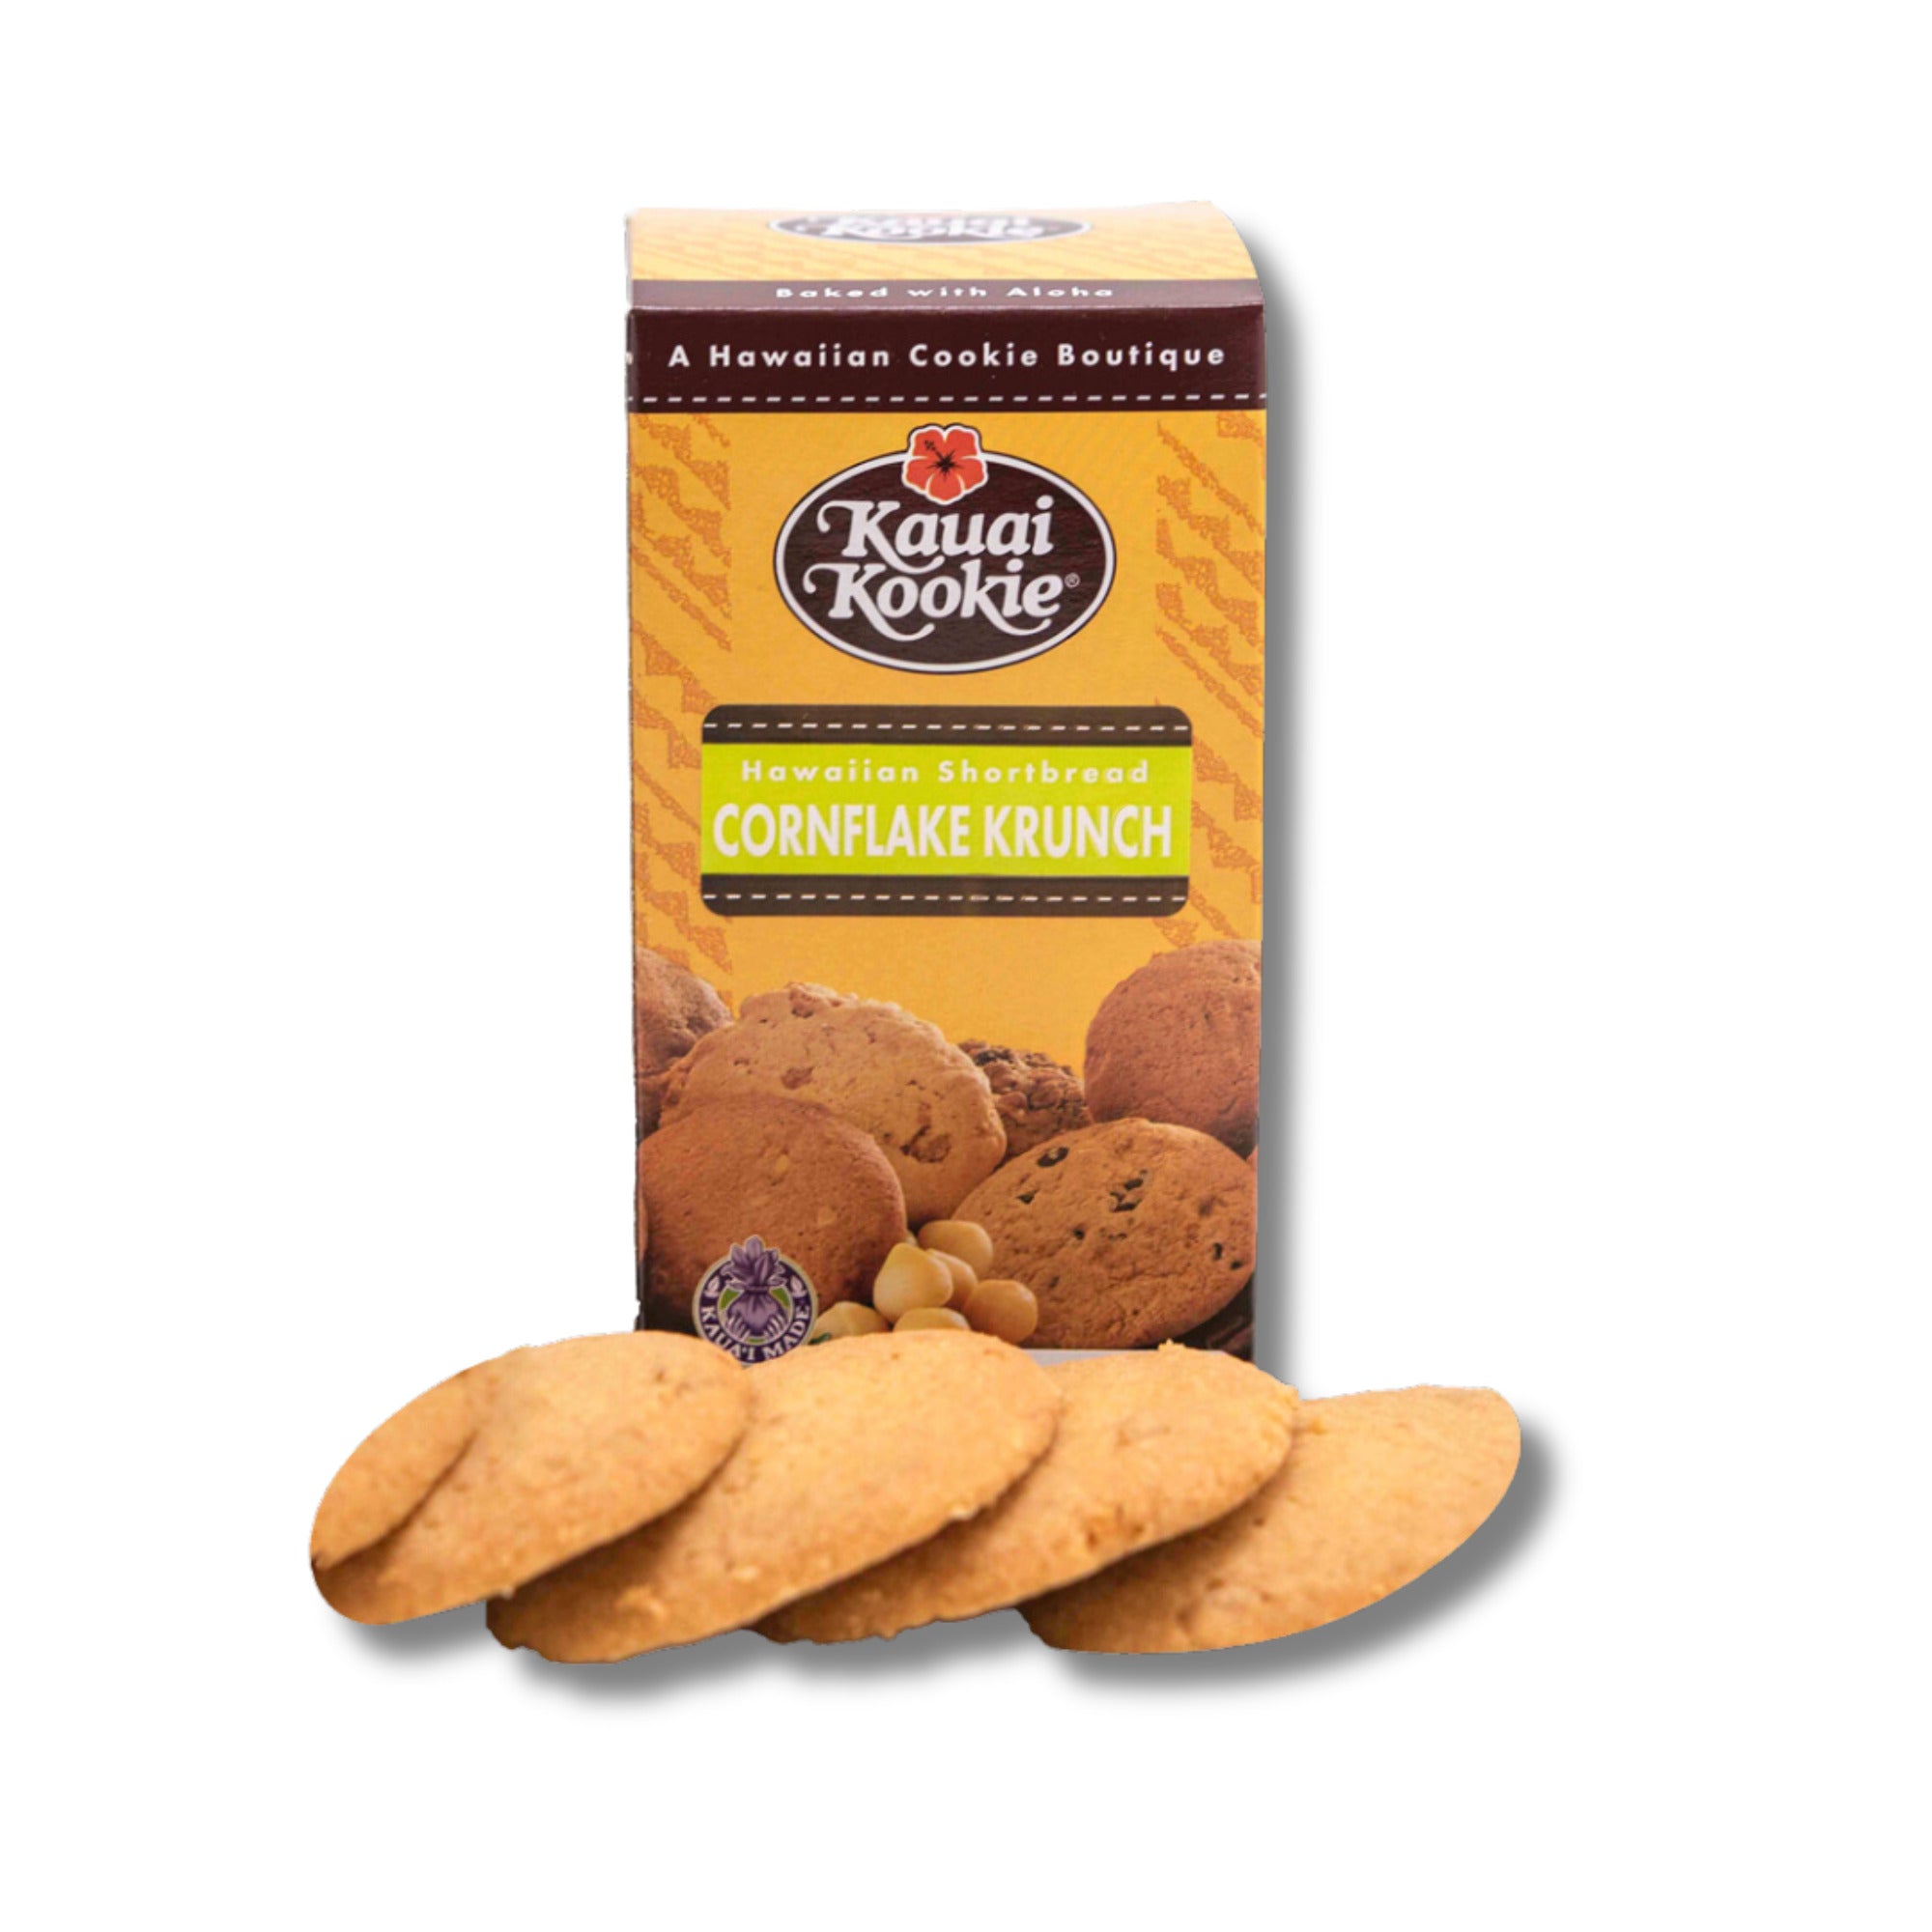 Pop-Up Mākeke - Kauai Kookie - Hawaiian Shortbread Cookies - Cornflake Krunch - Front View